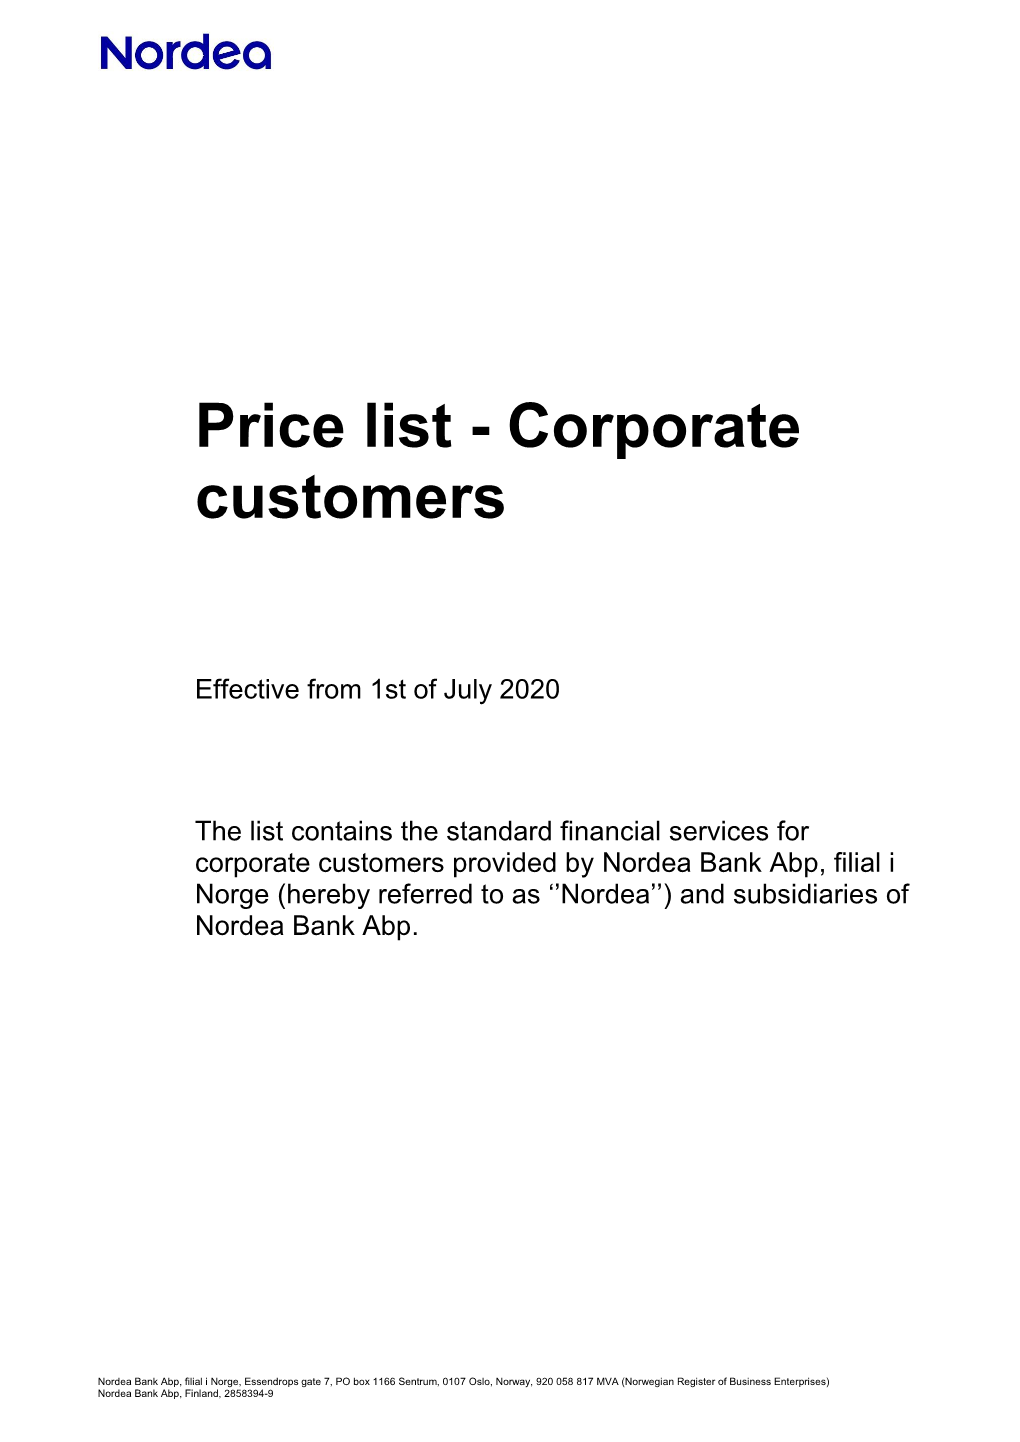 Price List - Corporate Customers